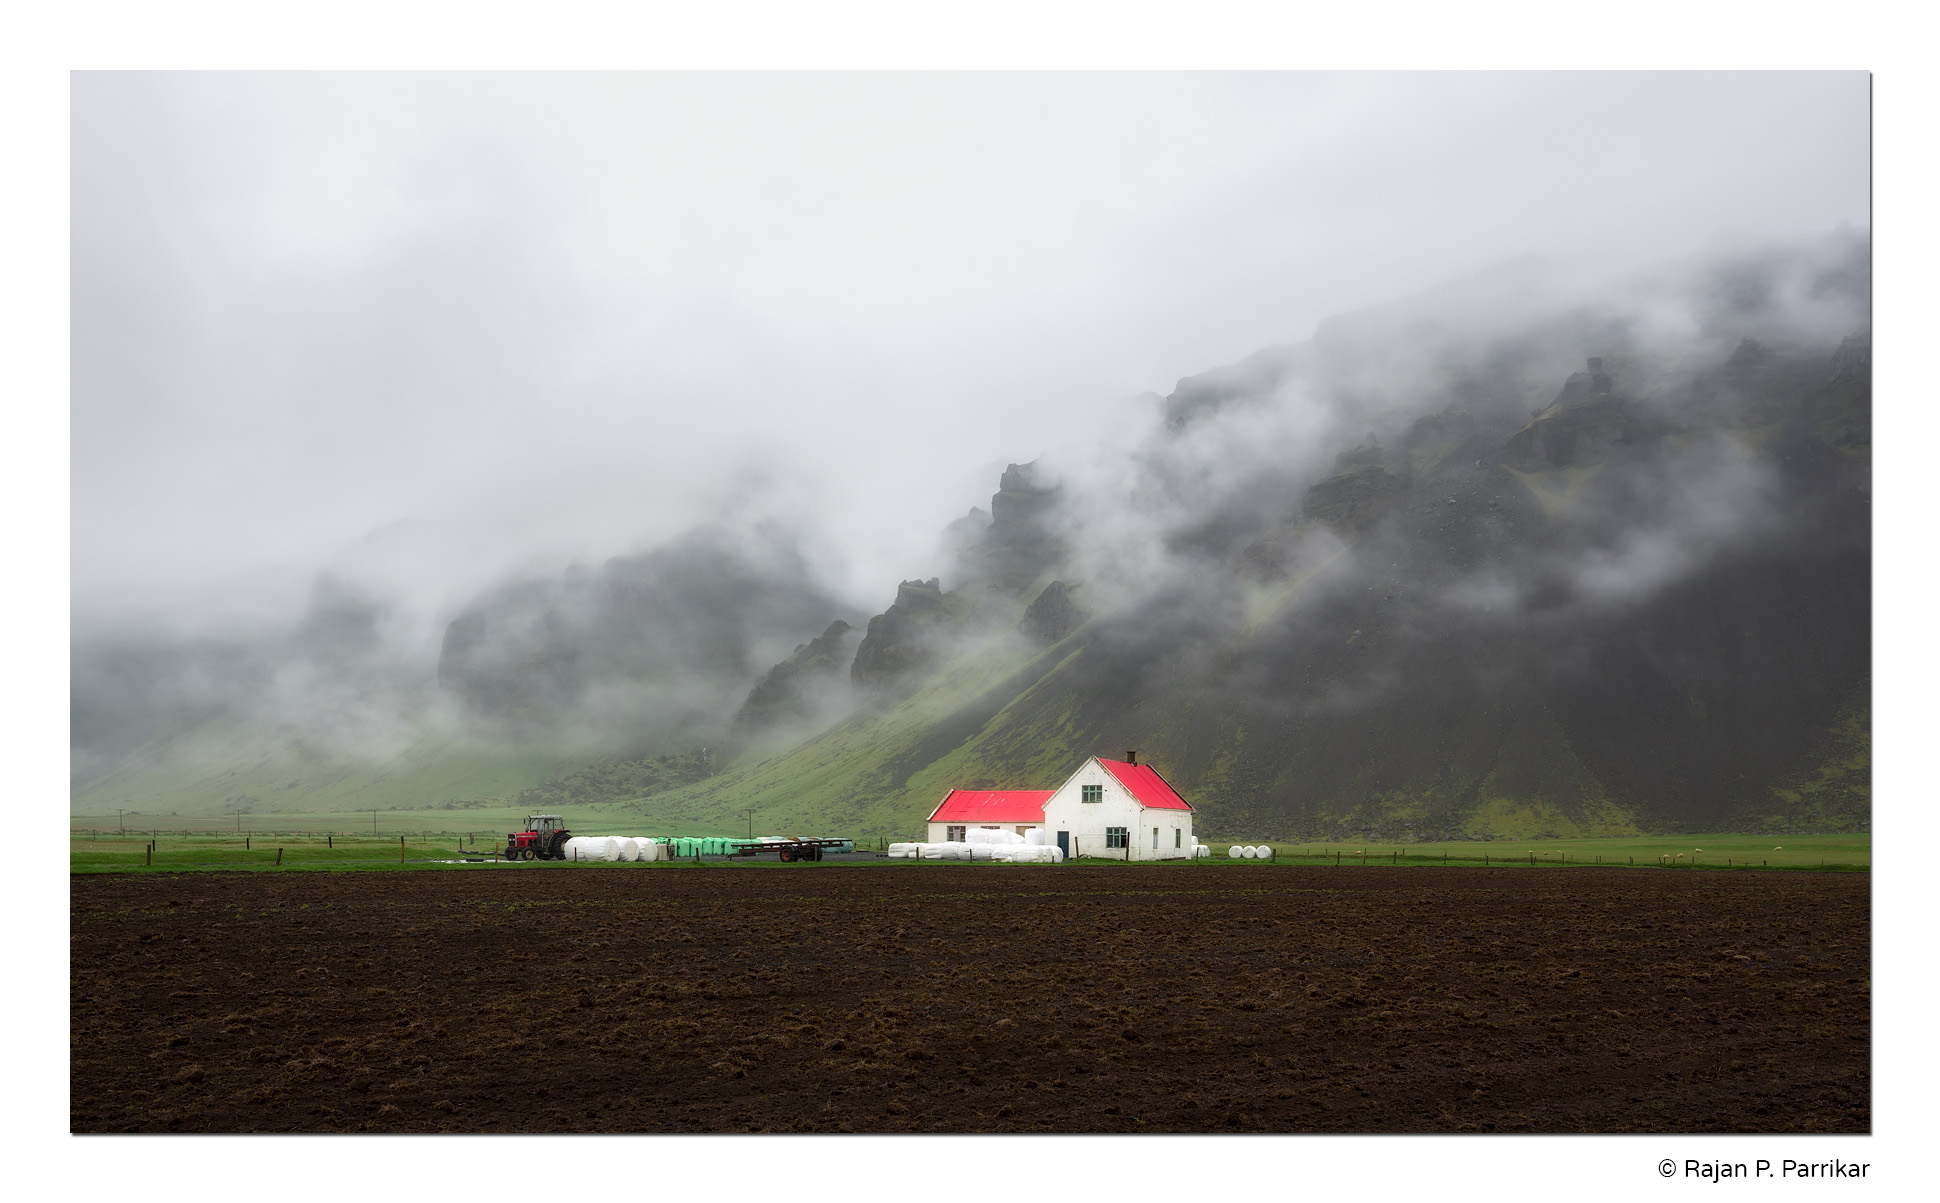 Saudhusvollur-Farm-Iceland